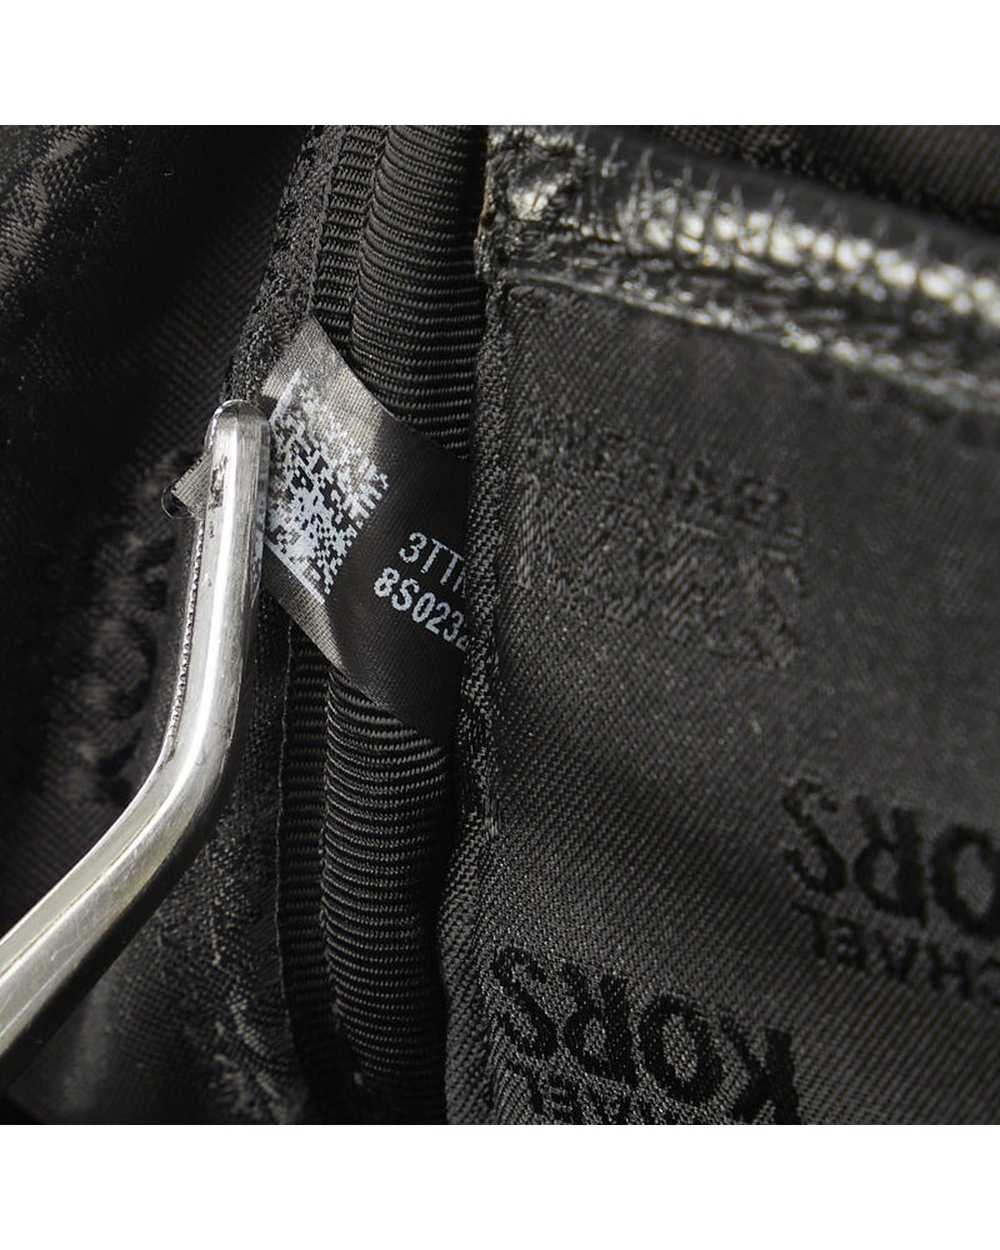 Michael Kors Studded Leather Abbey Backpack Bag - image 8